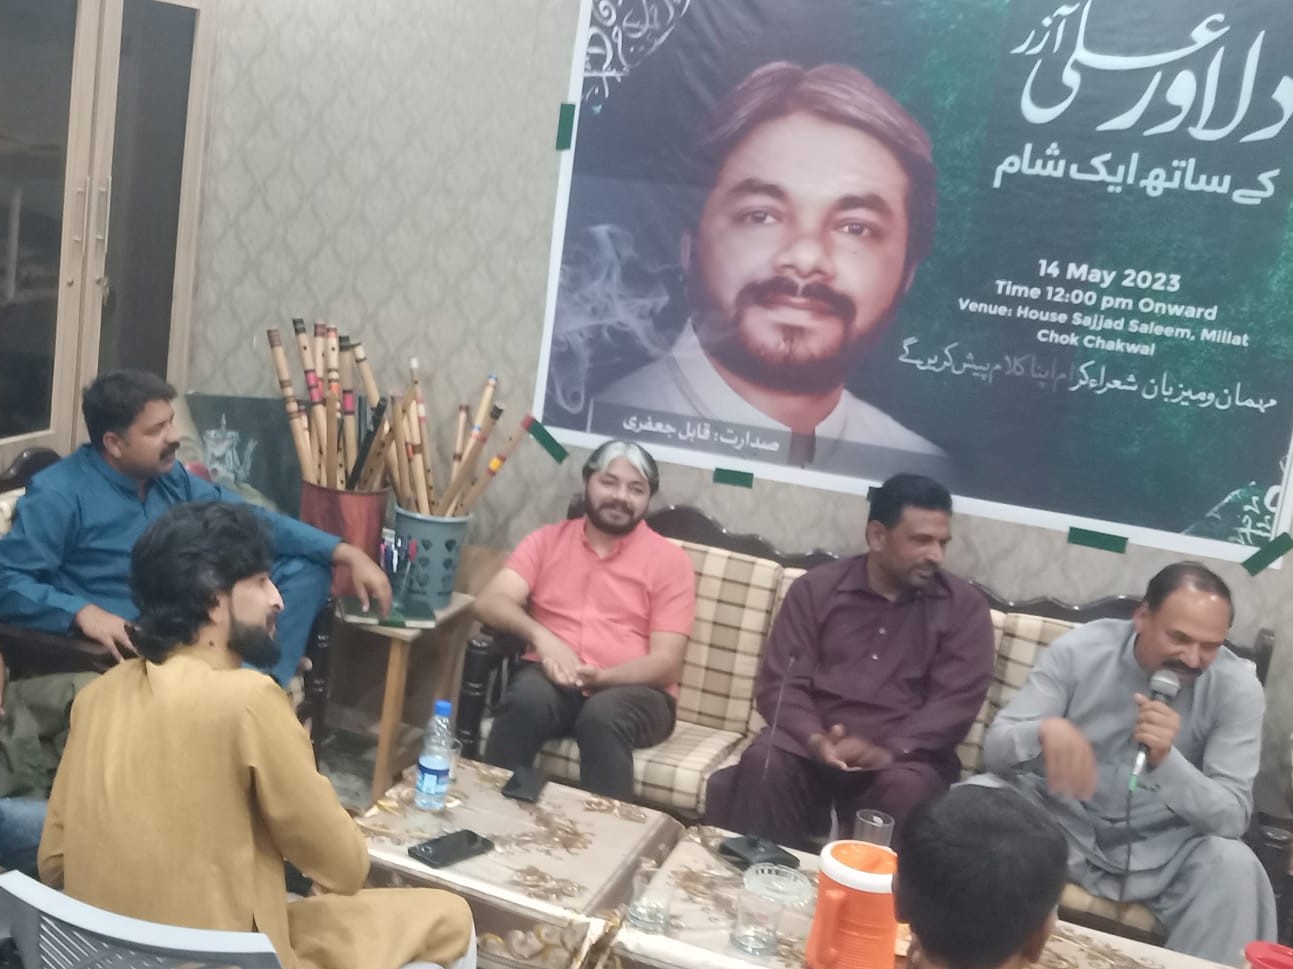 Poet Dilawar Ali Azar Honored at Grand Poetry Event